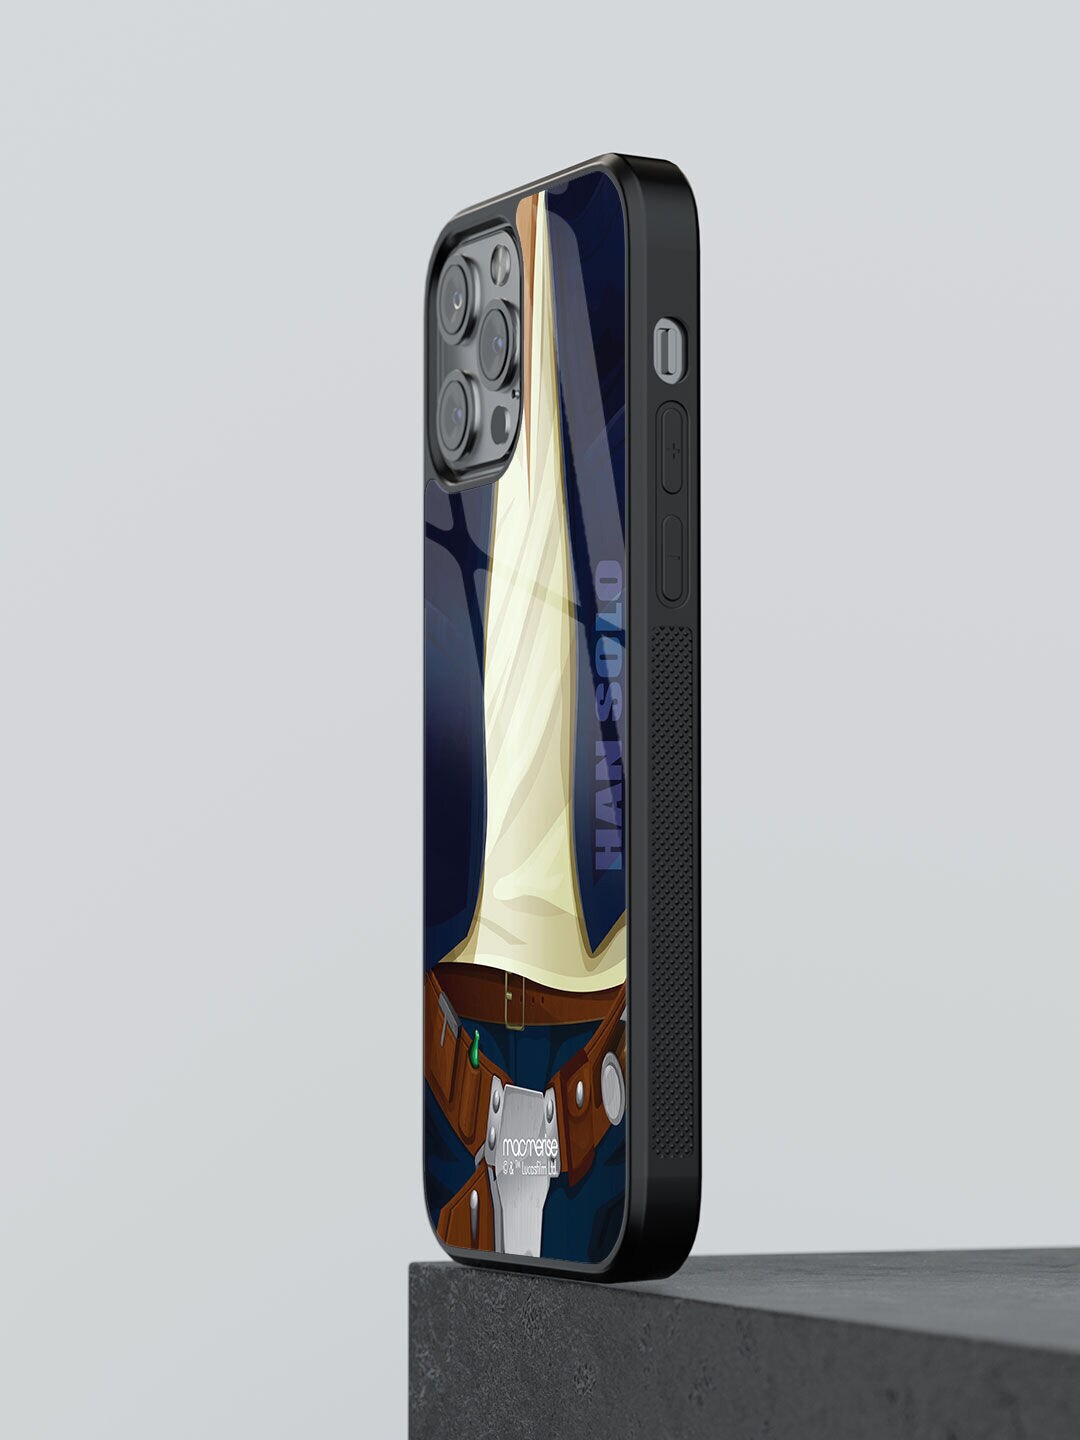 macmerise Blue Printed Attire Han iPhone 12 Pro Max Back Case Price in India